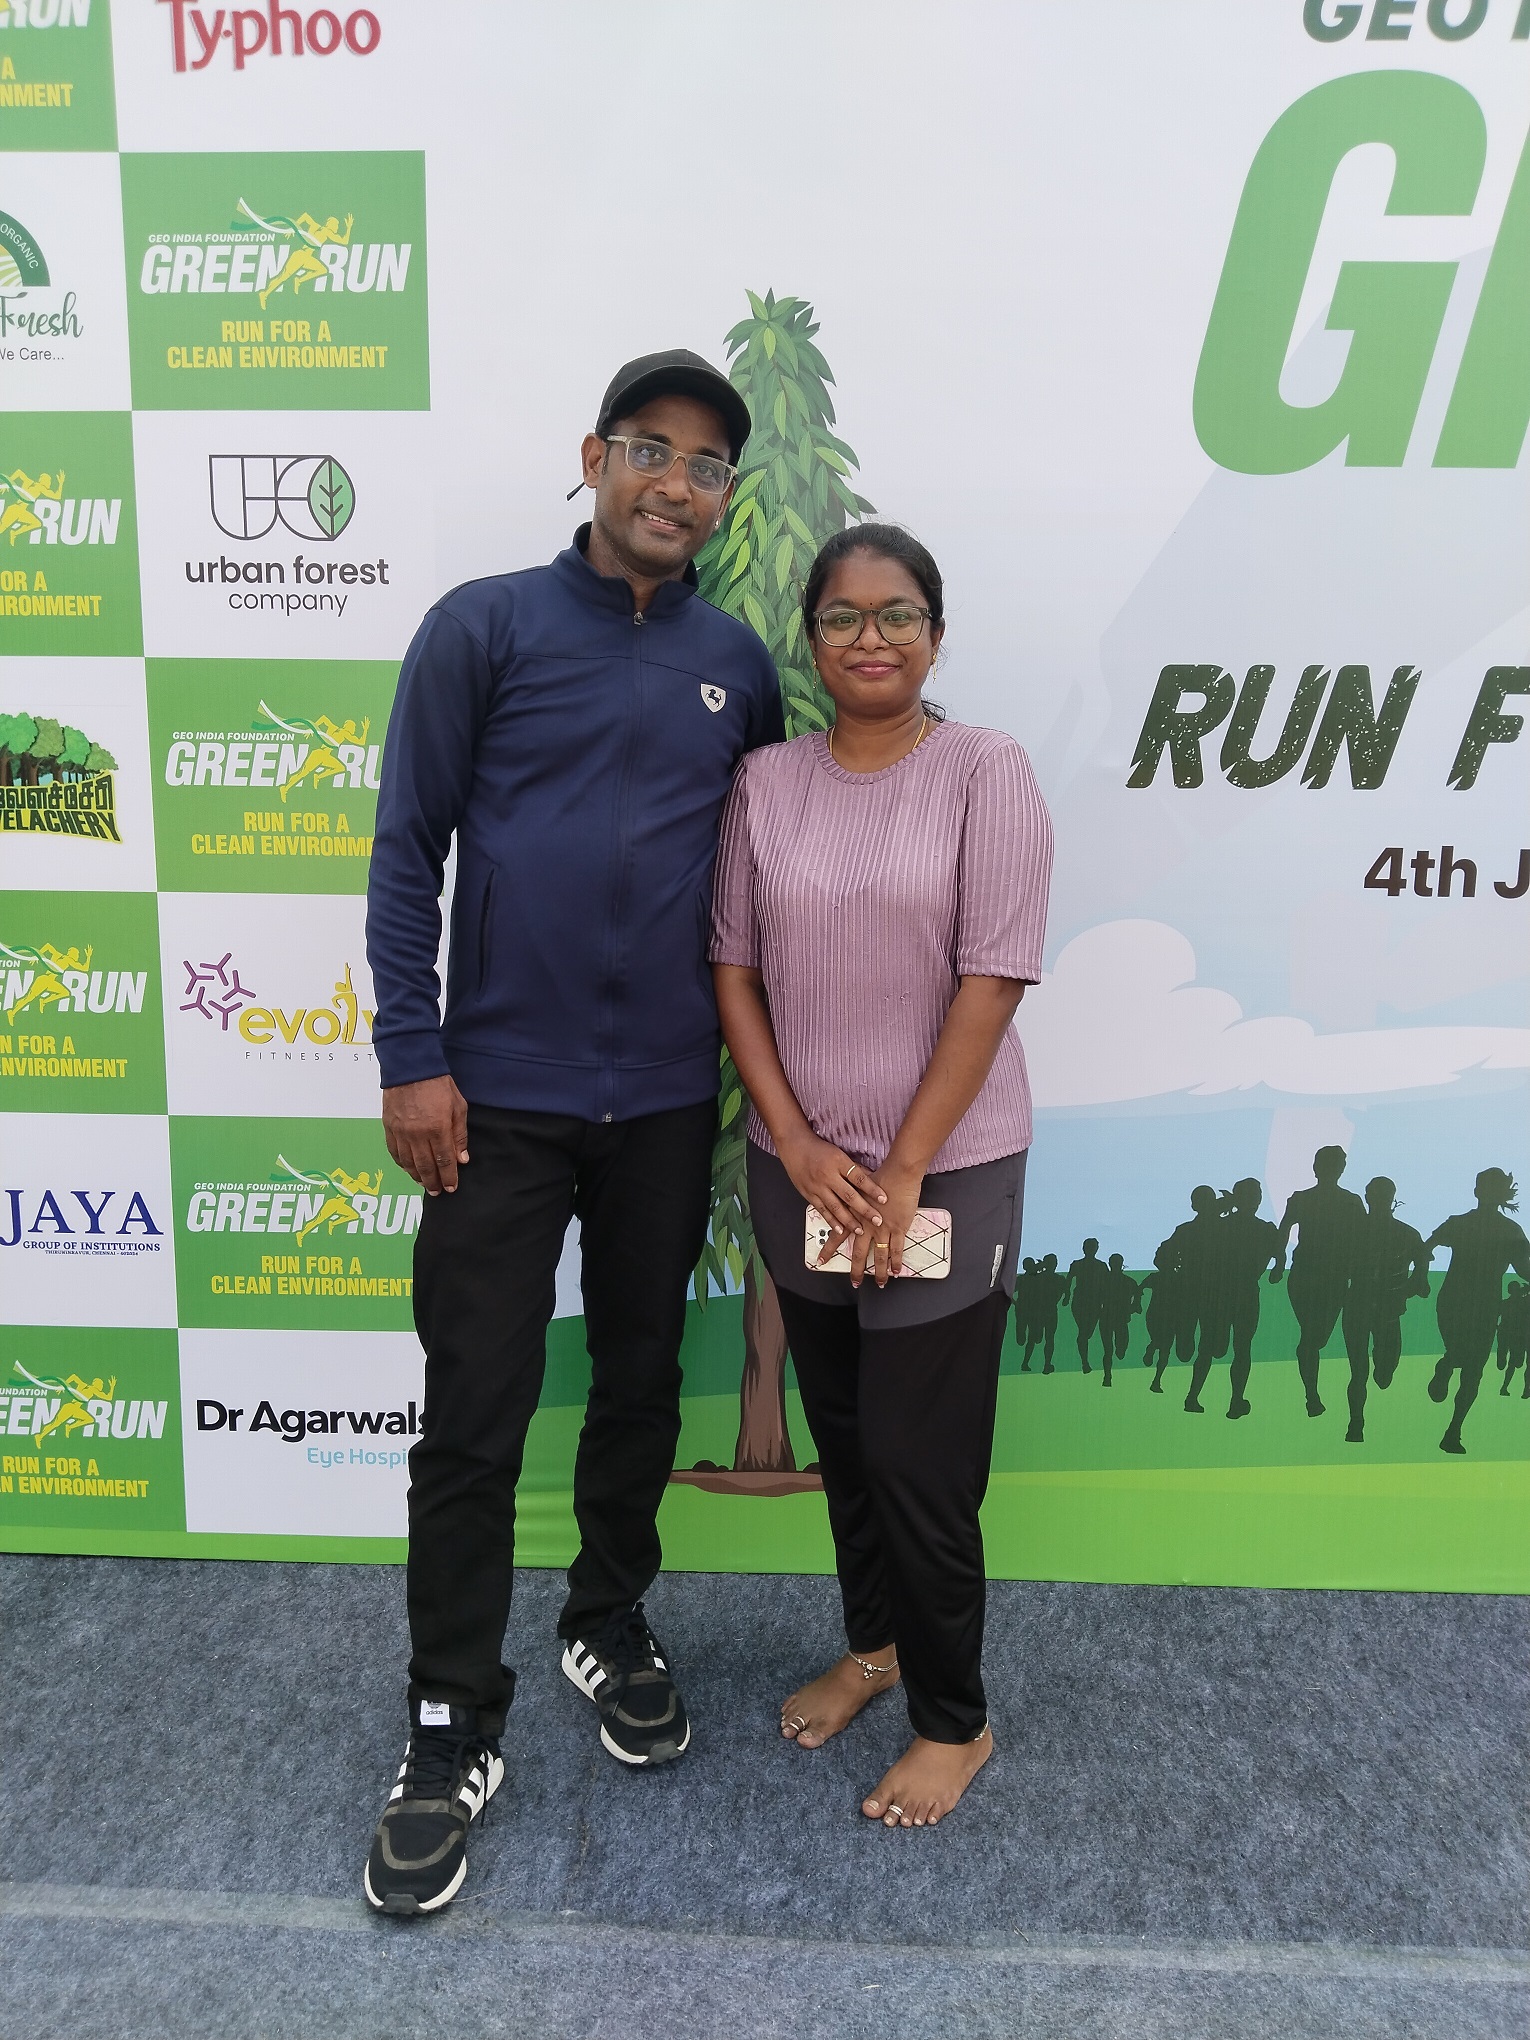 Chennai Event Emcees Anchor Thamizharasan with Telangana Marathon Organizer Digital Shamyaa